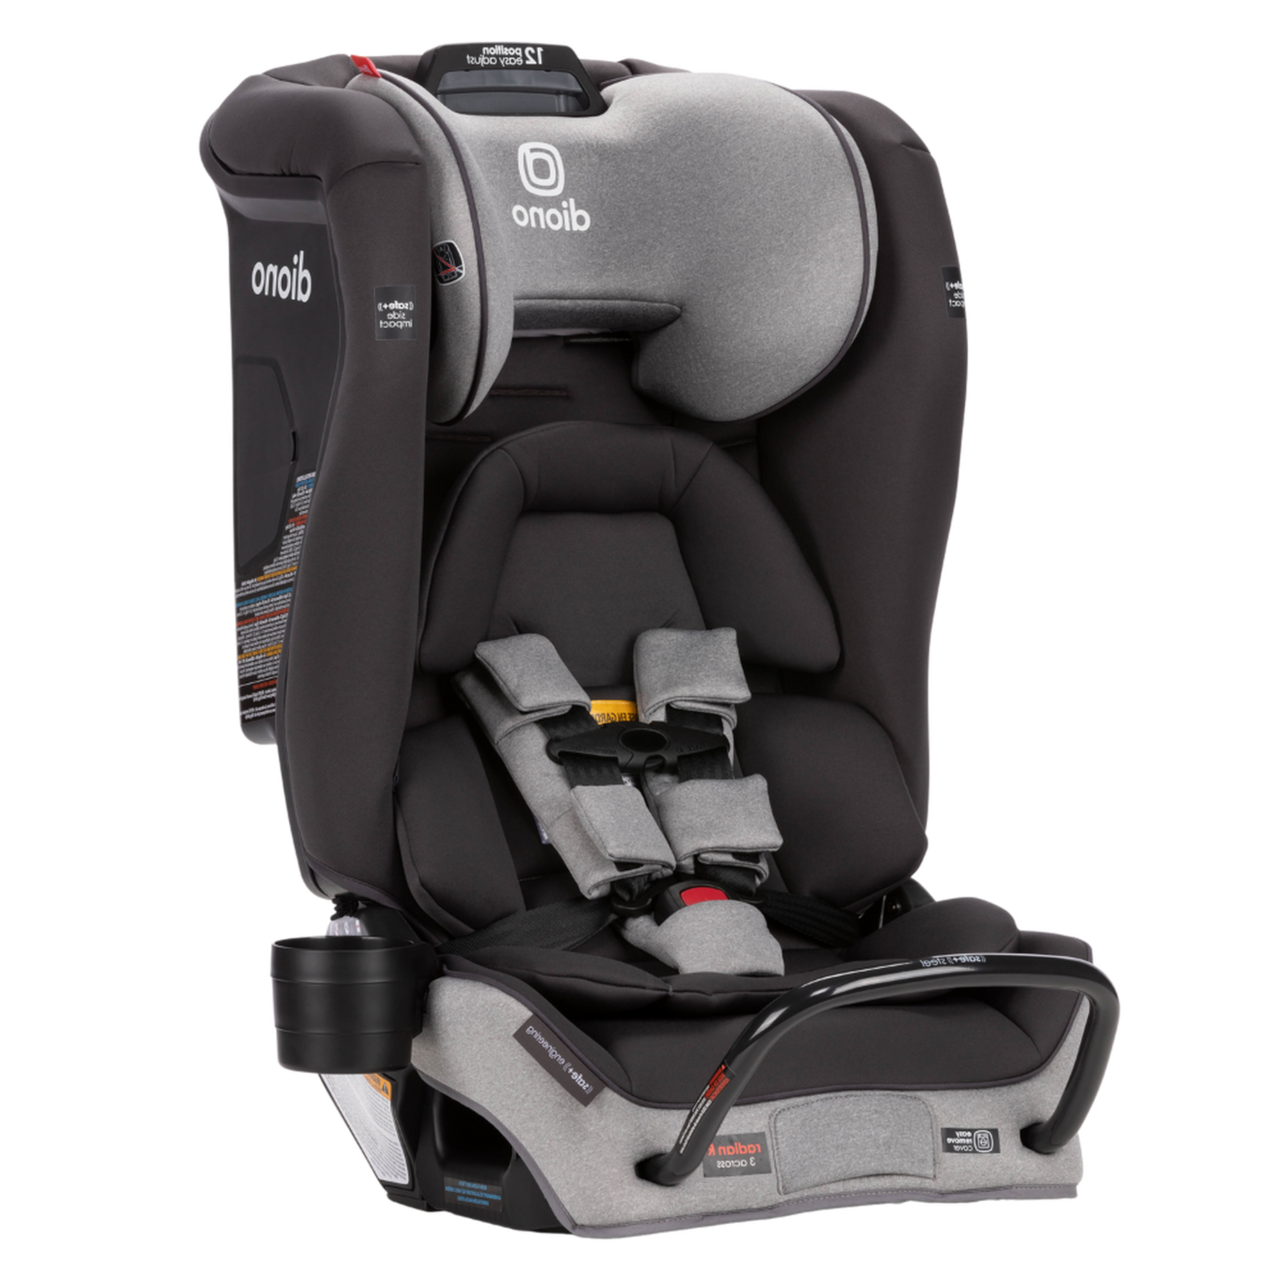 DIONO Radian 3RXT Safe+ Car Seat